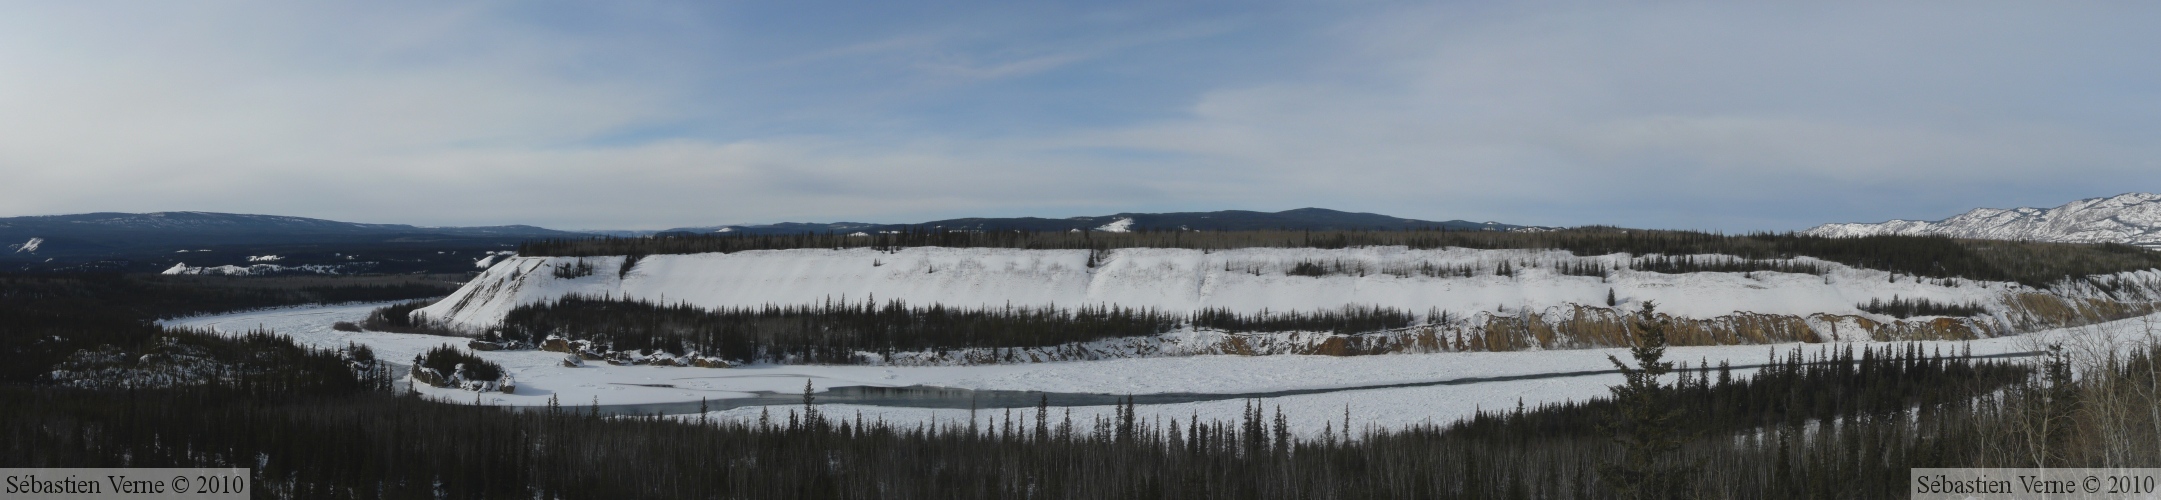 P1190812-Panorama Dempster Winter 06 - Five Fingers Rapids.jpg